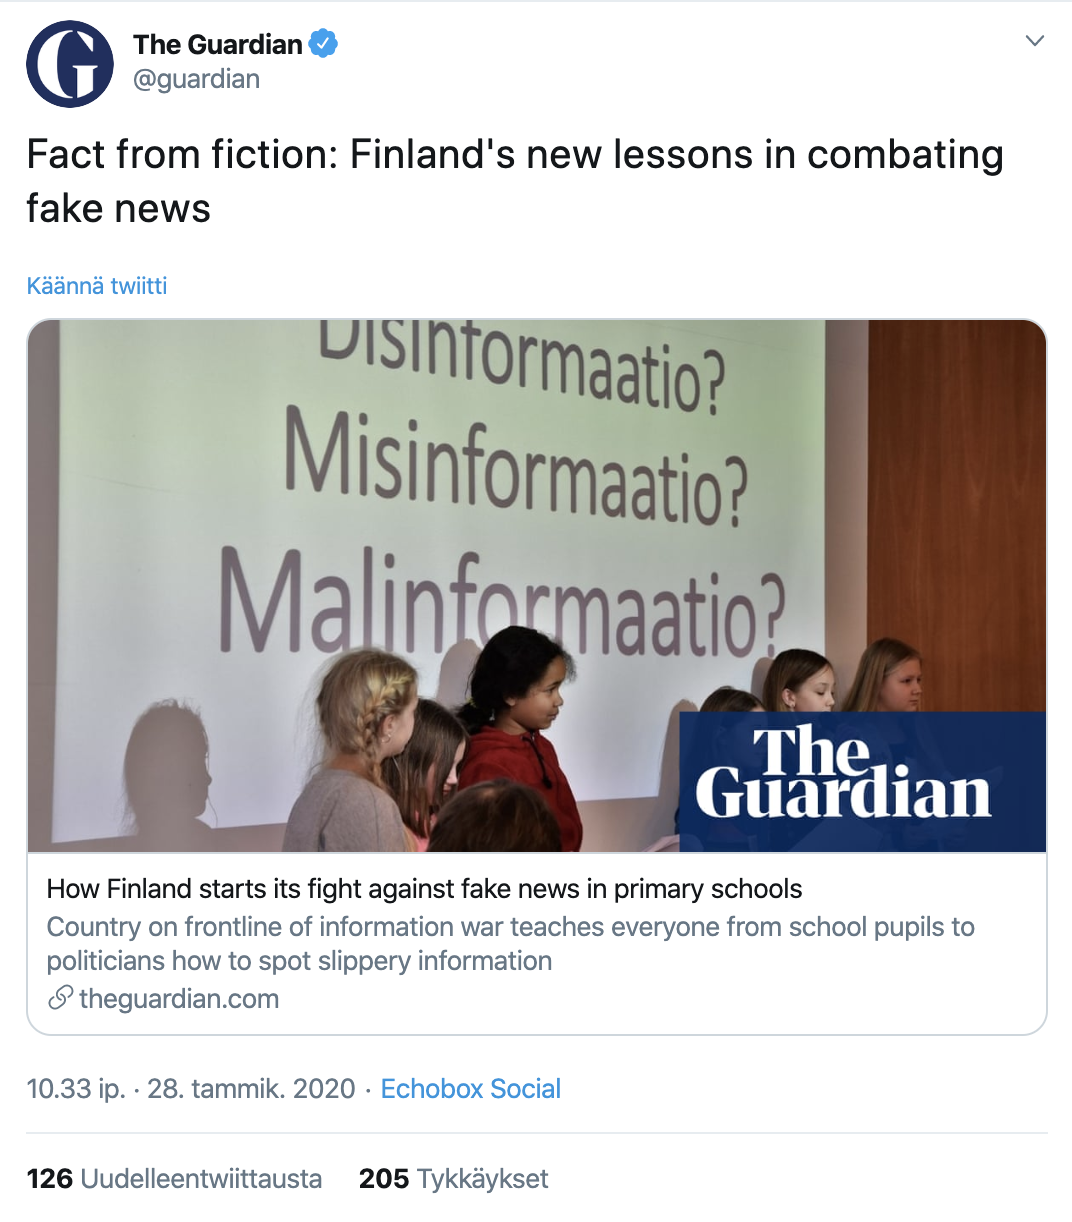 FactBar EDU information literacy at The Guardian